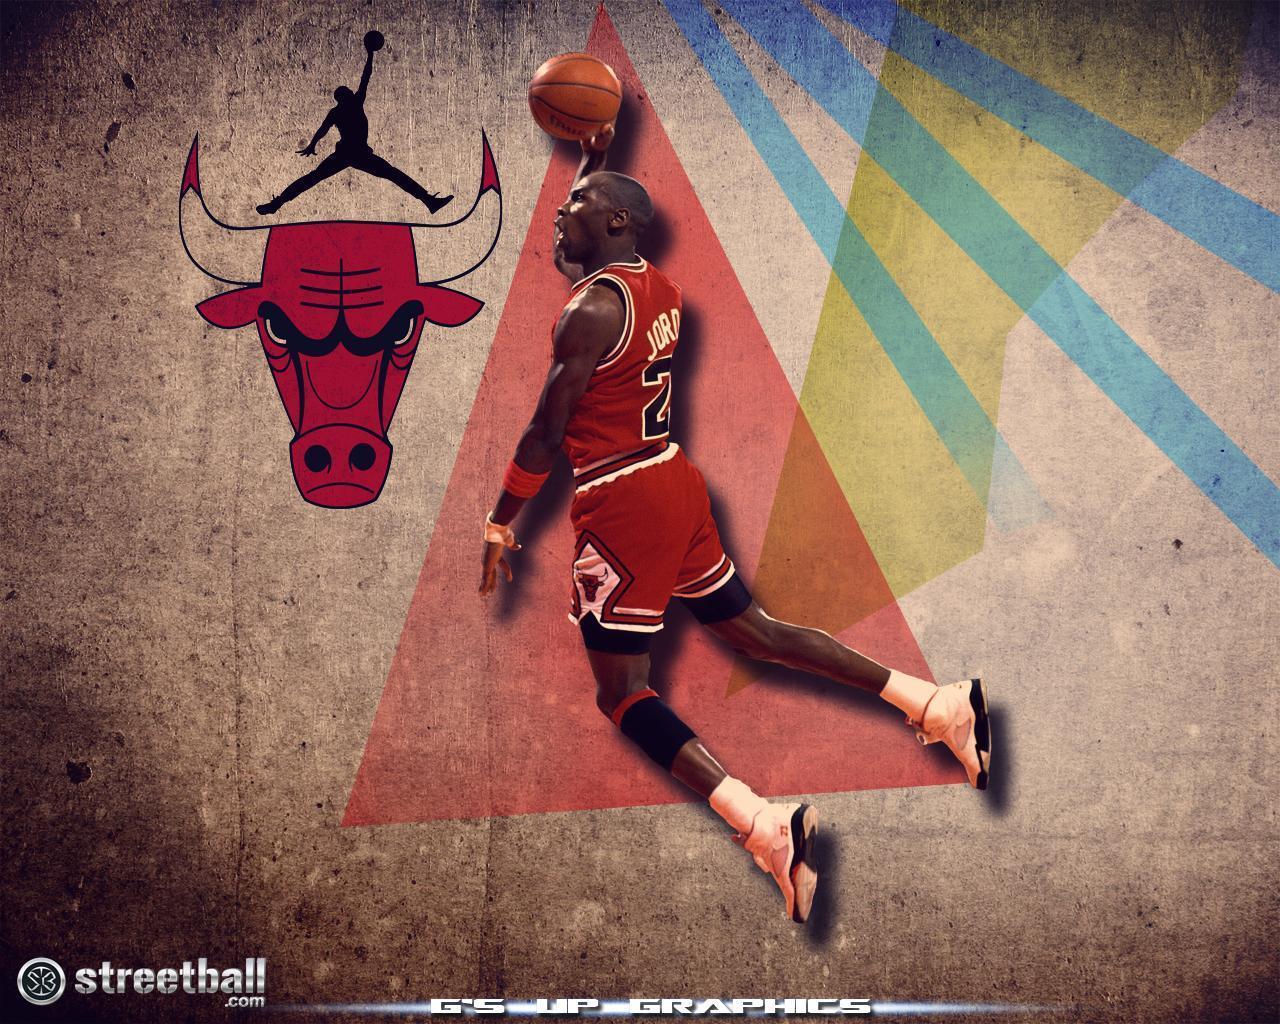 Flight Michael Jordan 2012 Wallpaper